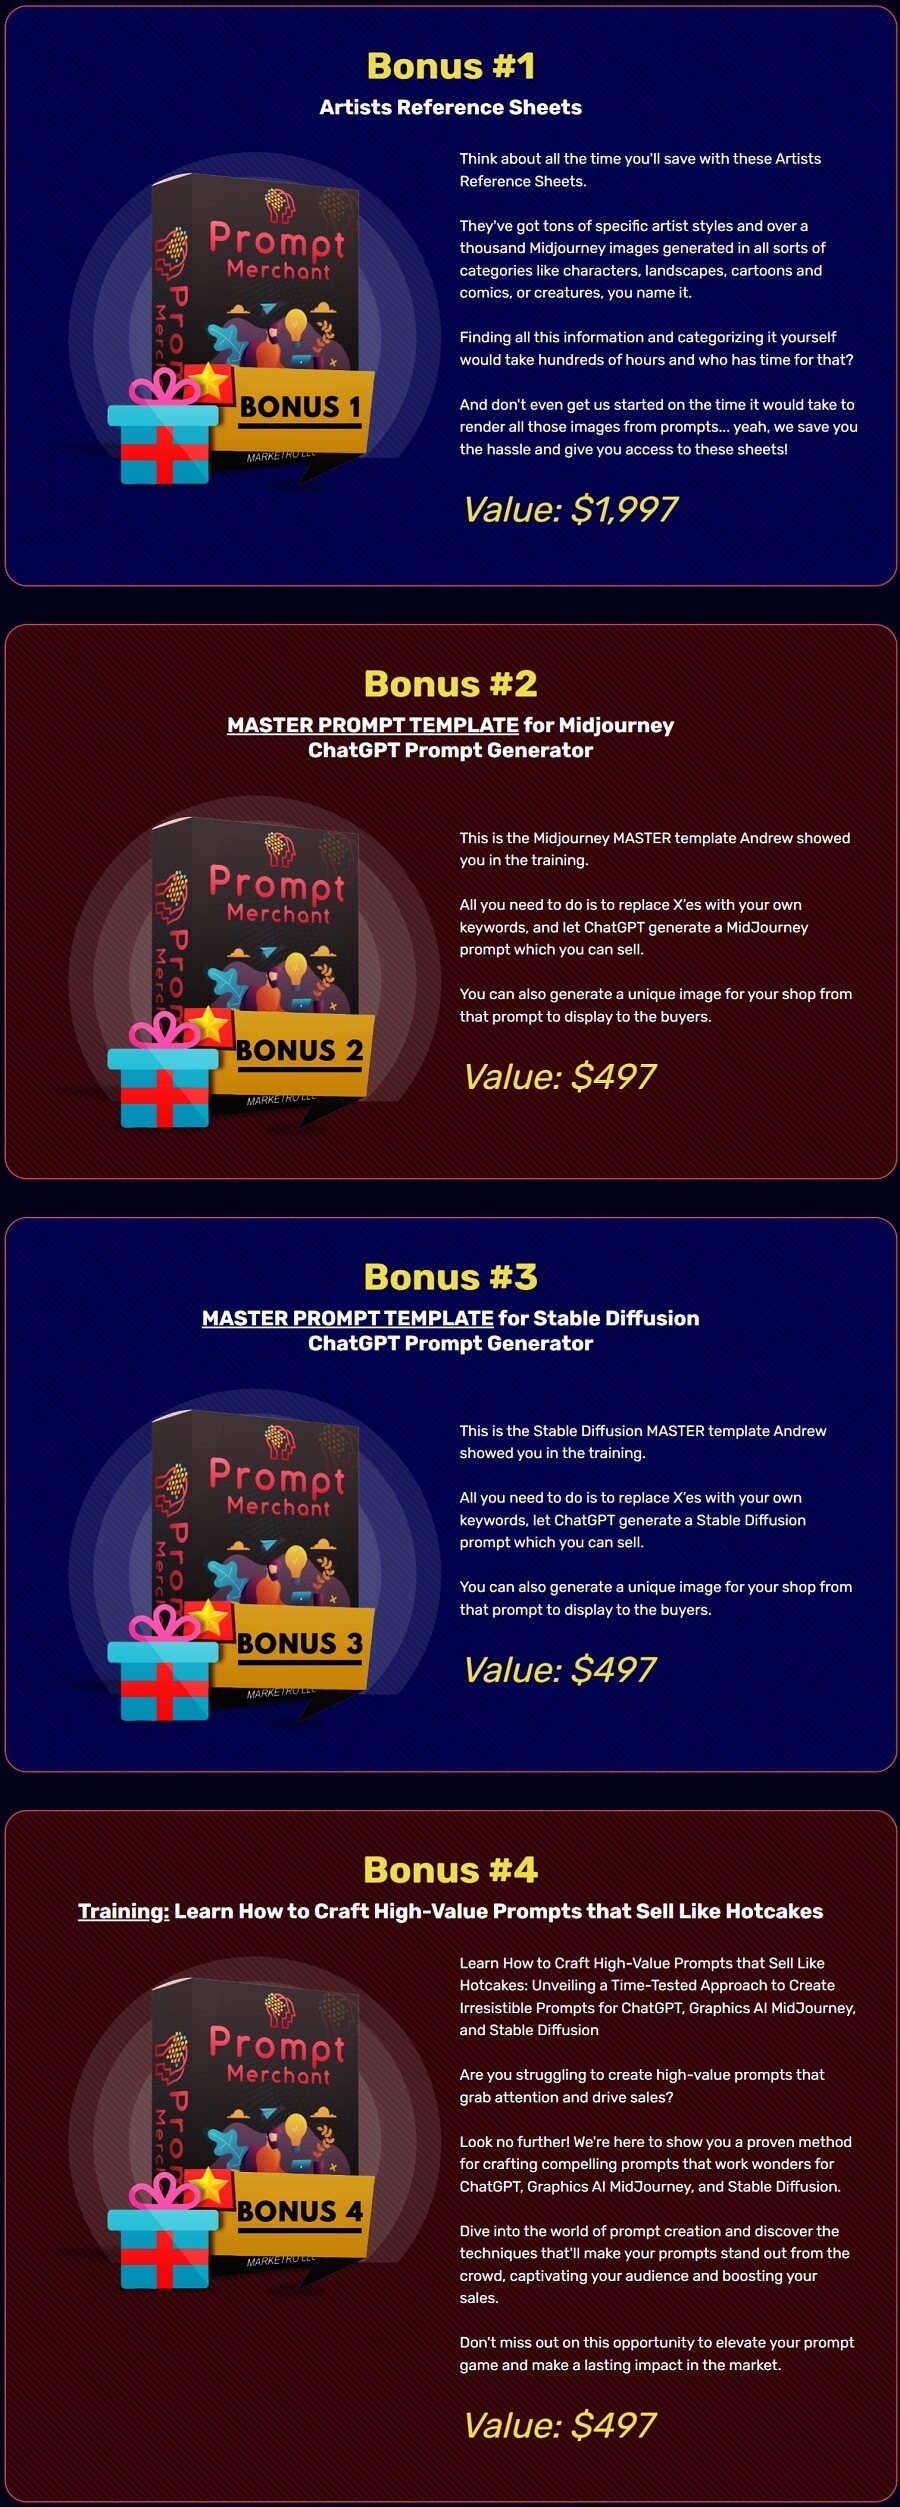 Prompt-Merchant-bonus-1